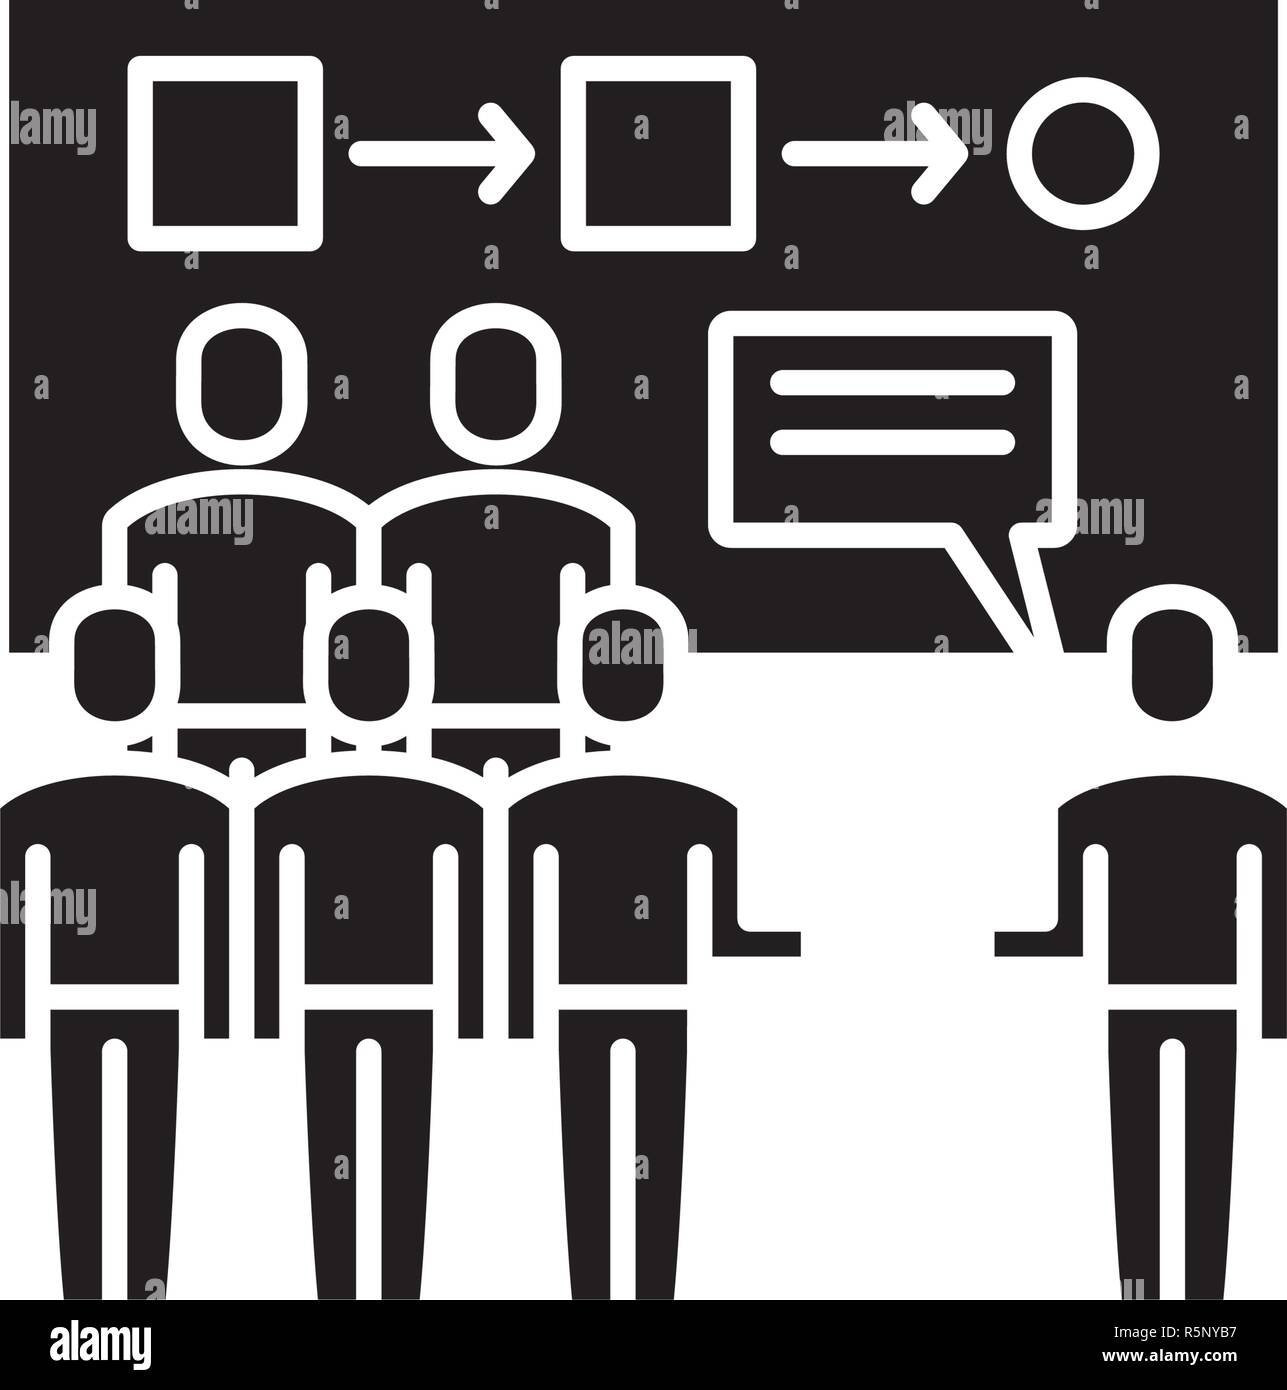 Customer segmentation black icon, vector sign on isolated background. Customer segmentation concept symbol, illustration  Stock Vector